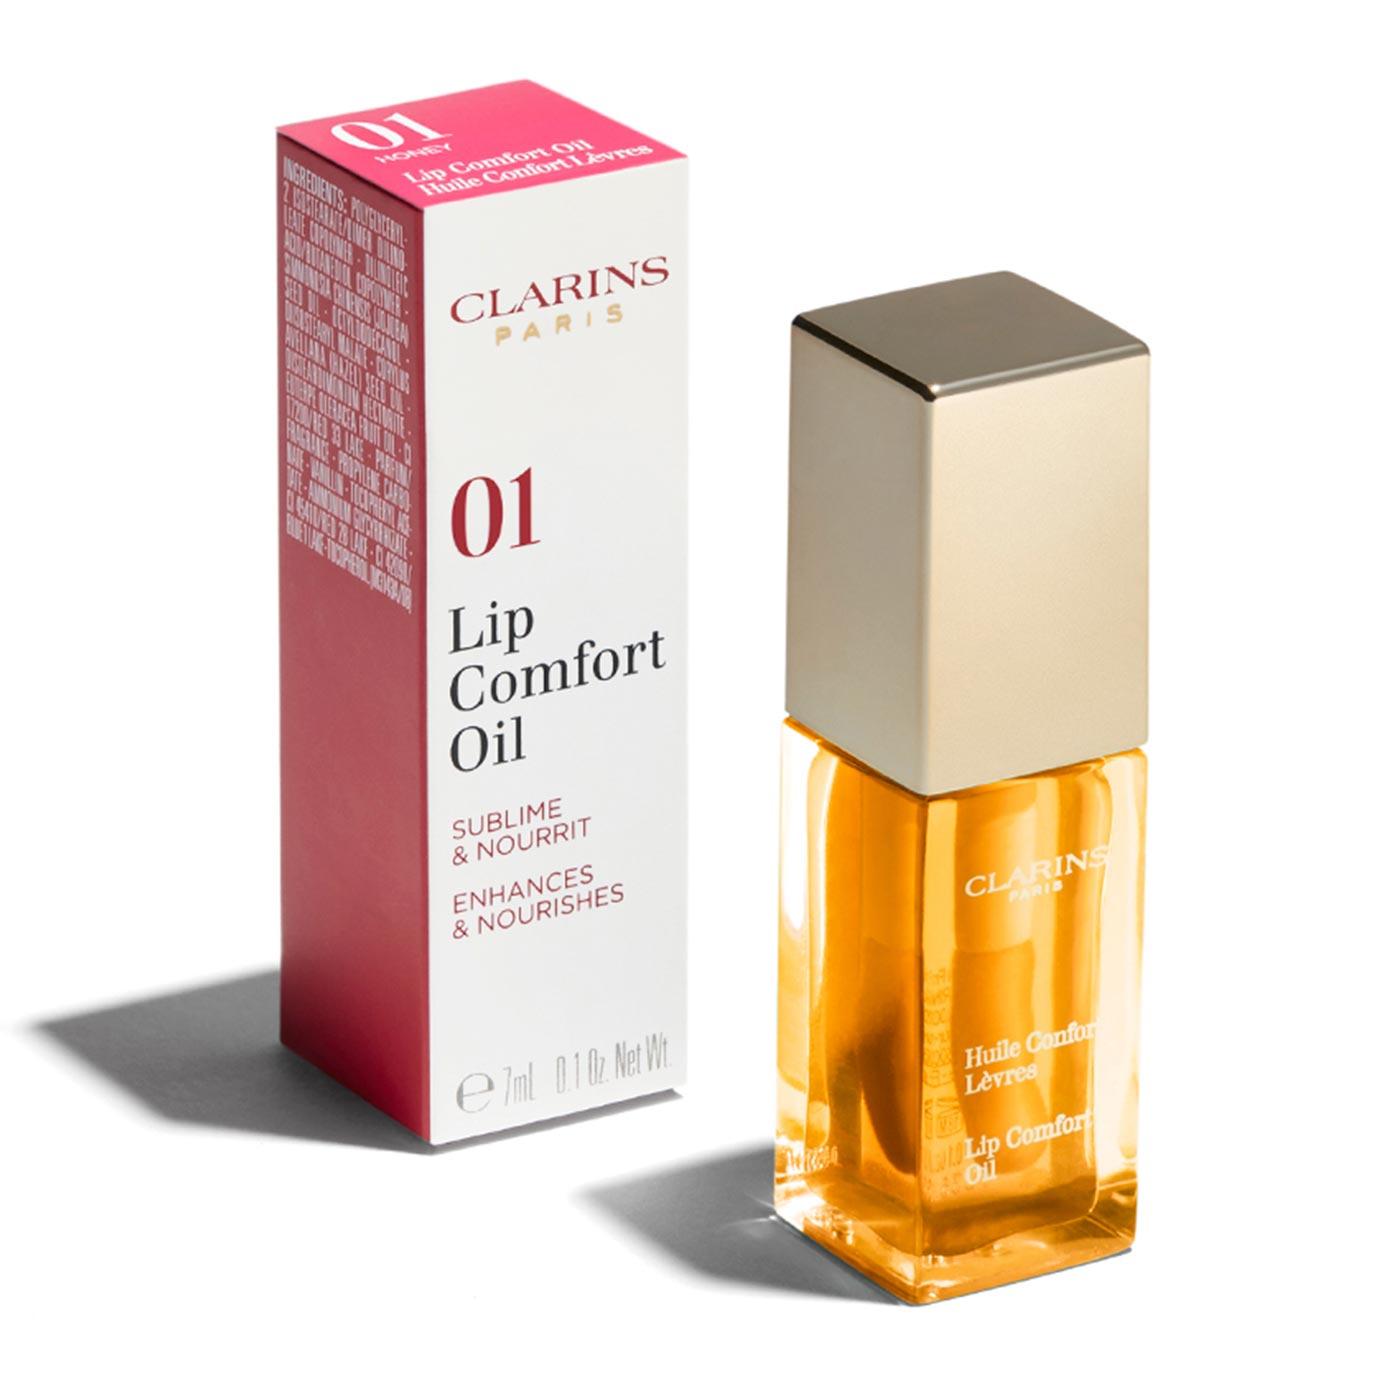 Lip Comfort Oil